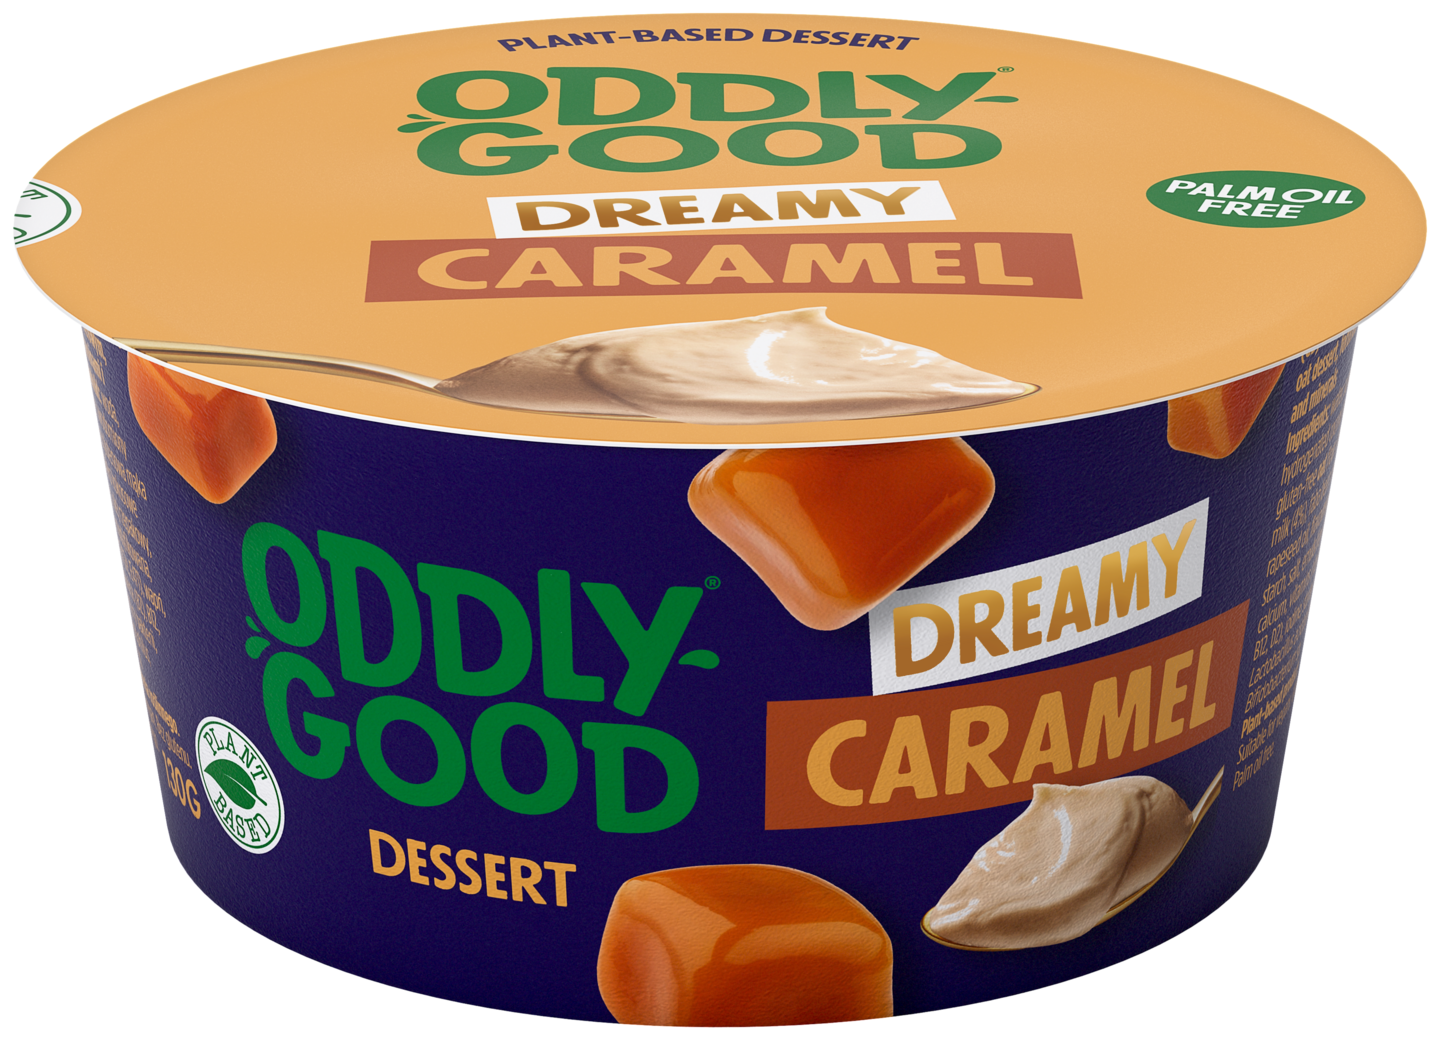 Oddlygood Dessert 130g dreamy caramel